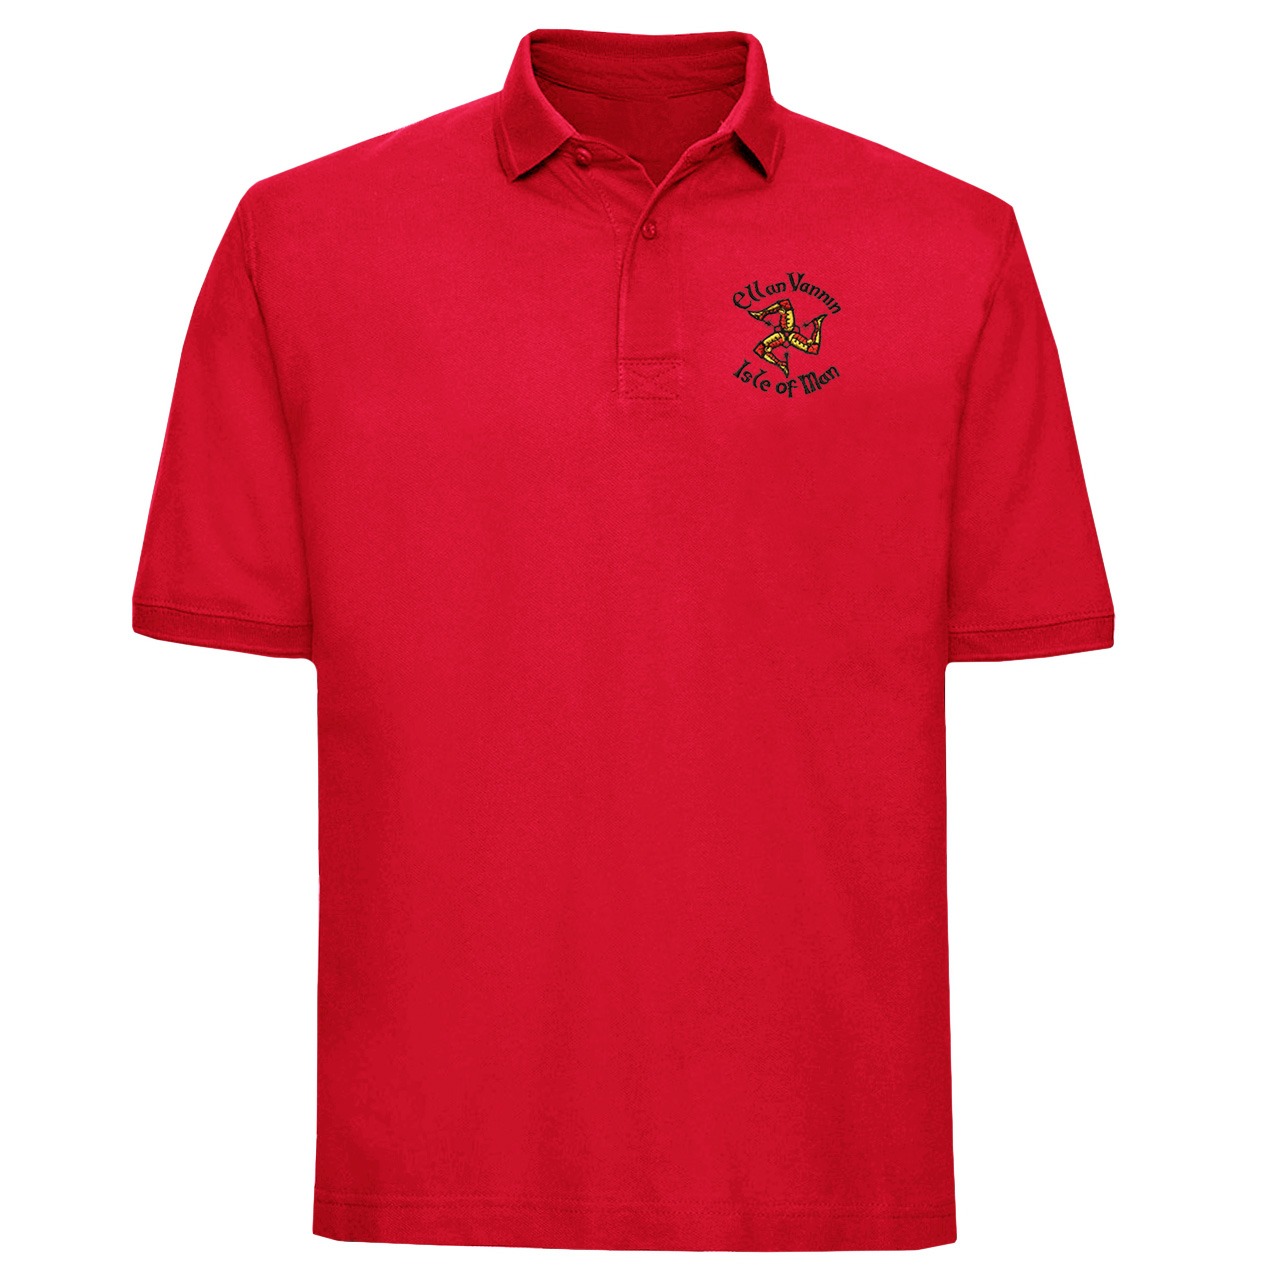 Quality Classic Red Manx Polo-shirt - 3 legs logo MEP 210 | POLOS ...